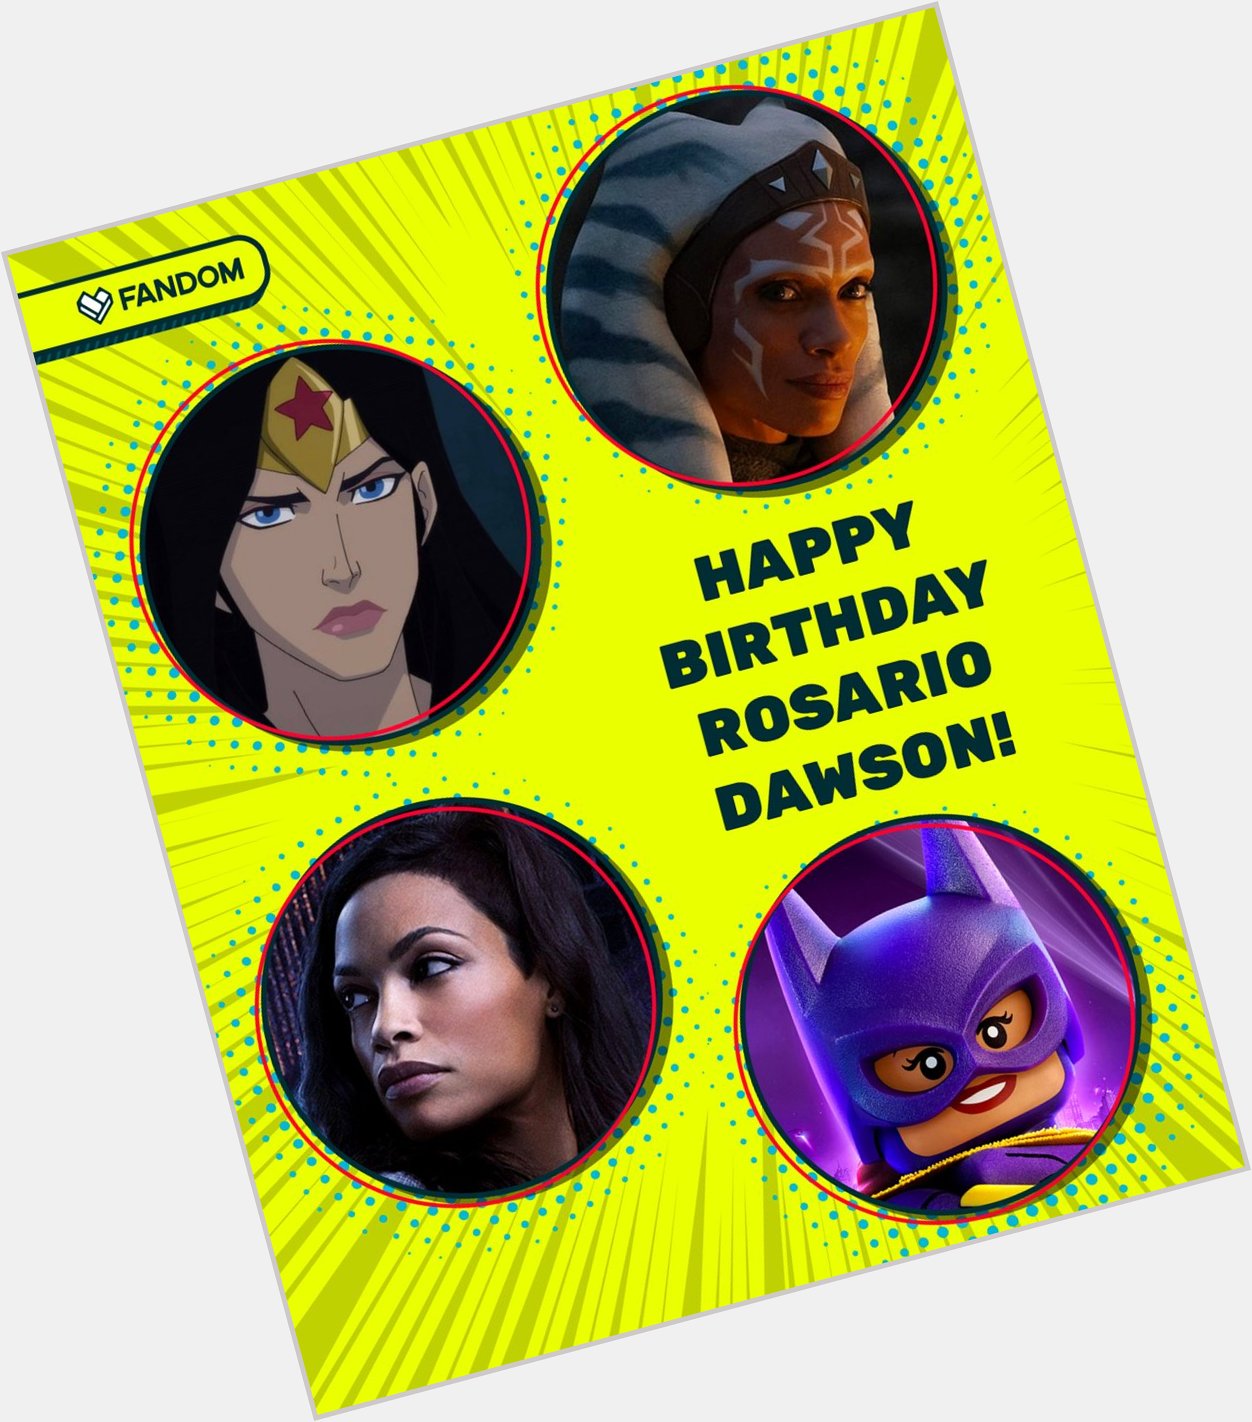 Happy Birthday Rosario Dawson She\s in rare company: Star Wars DC Marvel 